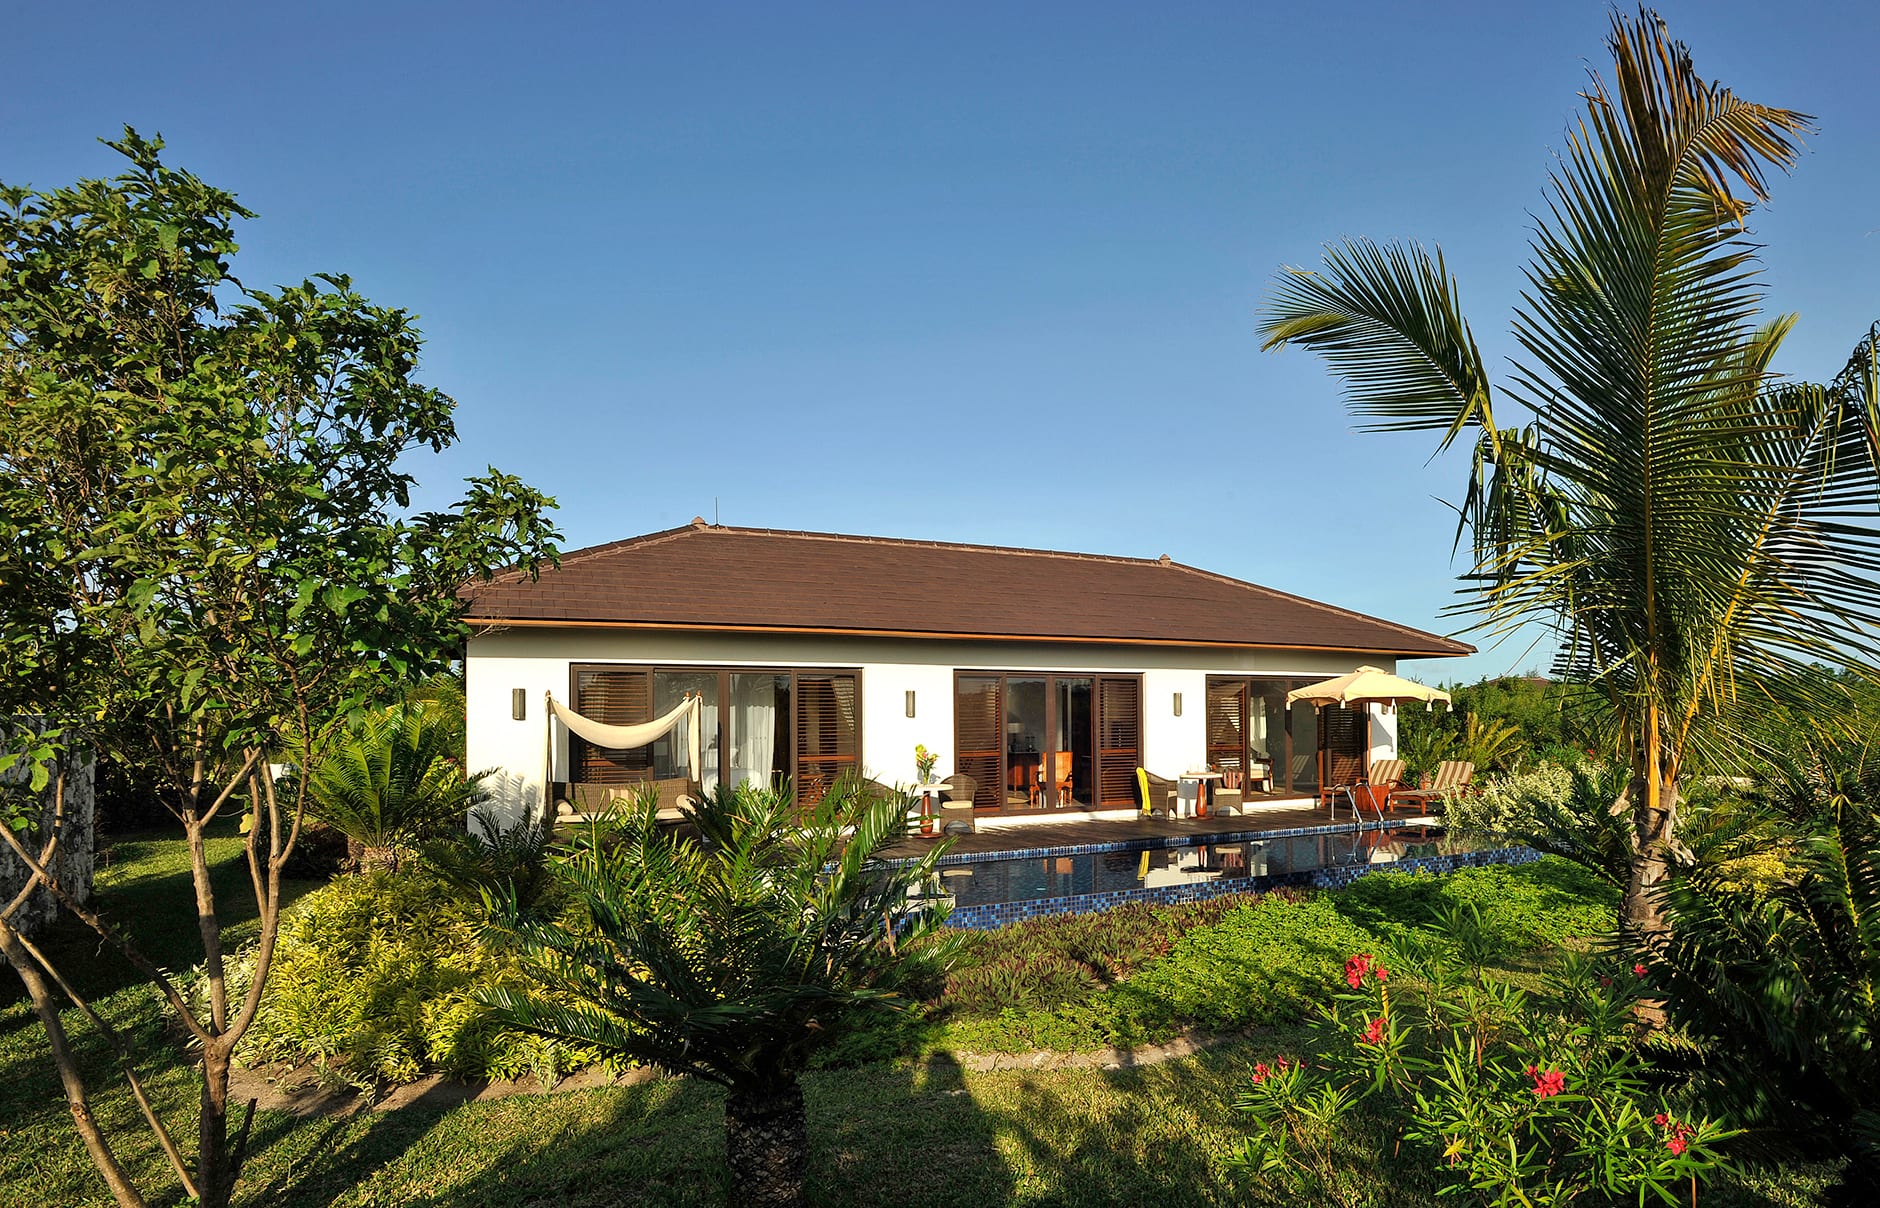 The Residence Zanzibar, Tanzania. Hotel Review by TravelPlusStyle. Photo © Cenizaro Hotel & Resorts